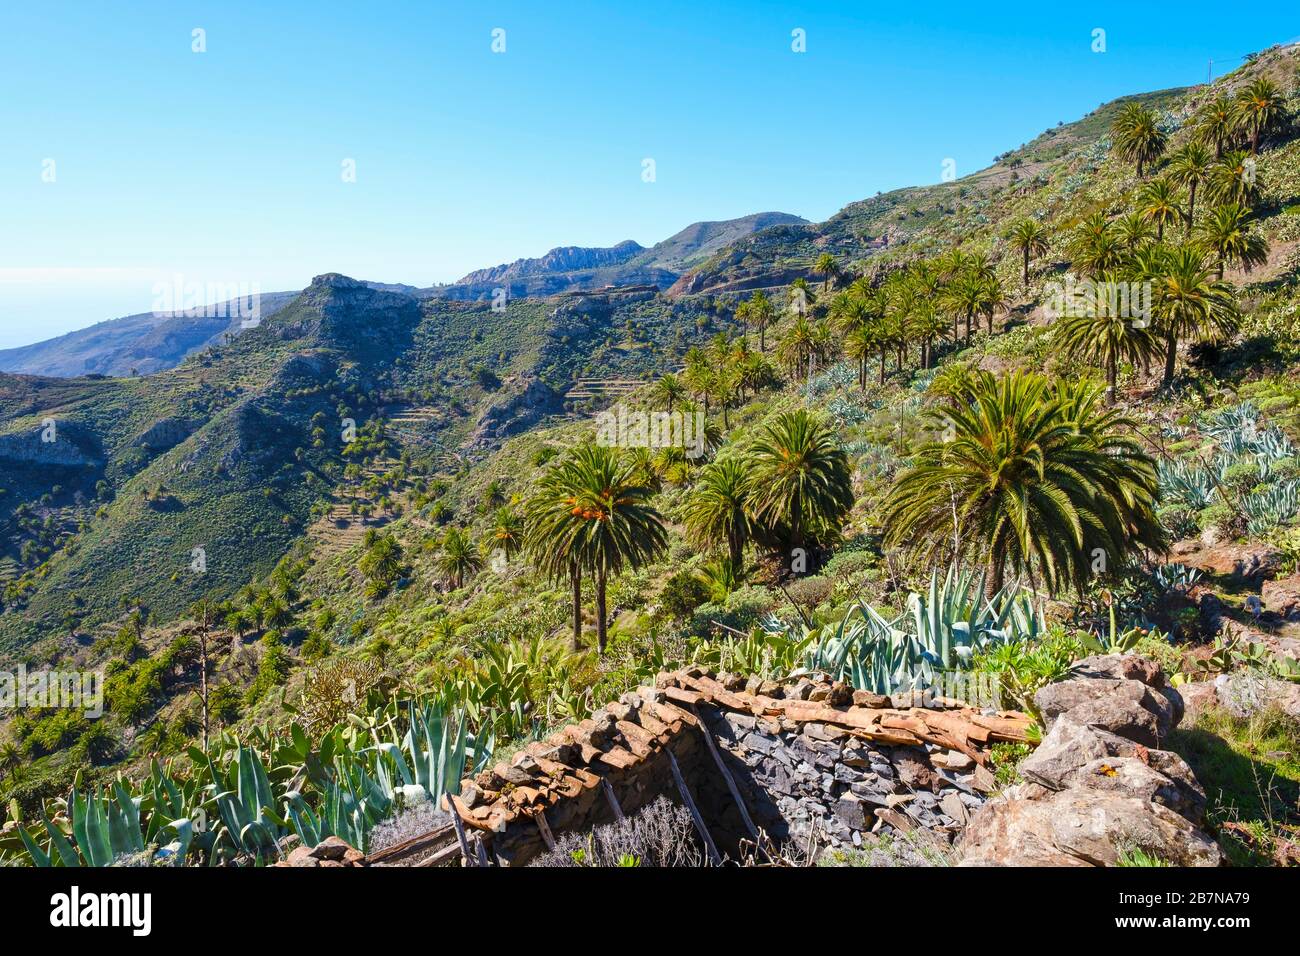 House ruin and Canary Island date palms (Phoenix canariensis), near Degollada de Pereza, near San Sebastian, La Gomera, Canary Islands, Spain Stock Photo